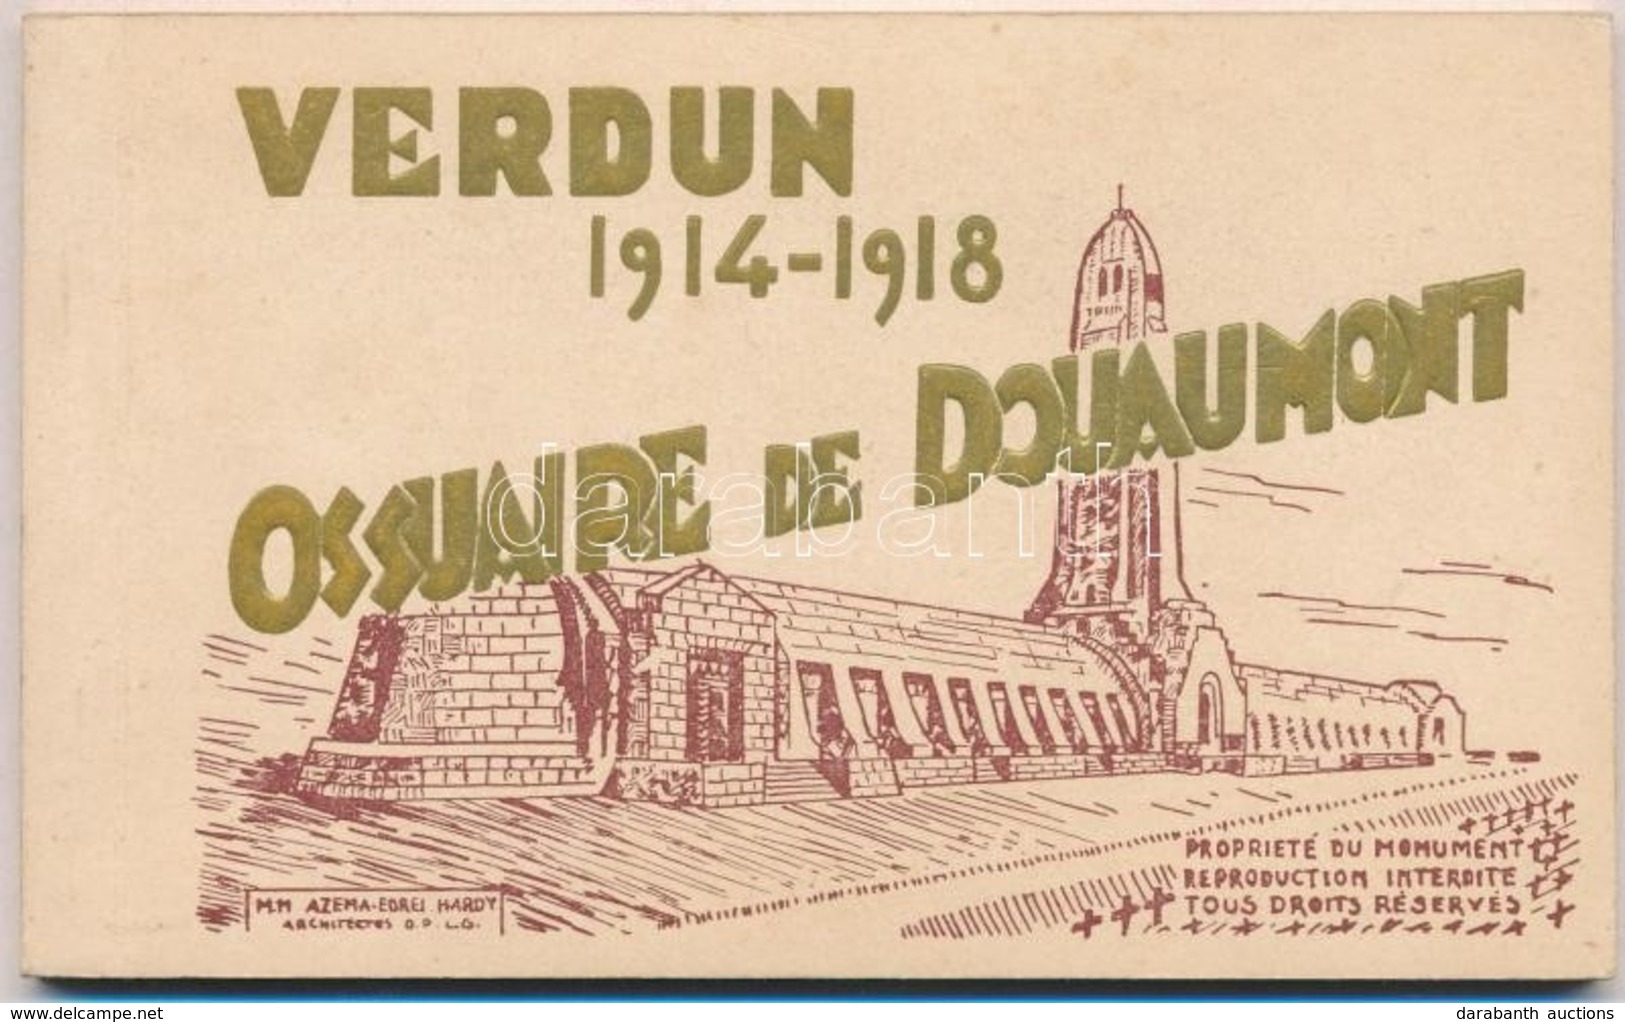 ** 1914-1918 Verdun, Ossuaire De Douaumont / Ossuary Of Douaumont - WWI Military Postcard Booklet With 10 Postcards - Unclassified